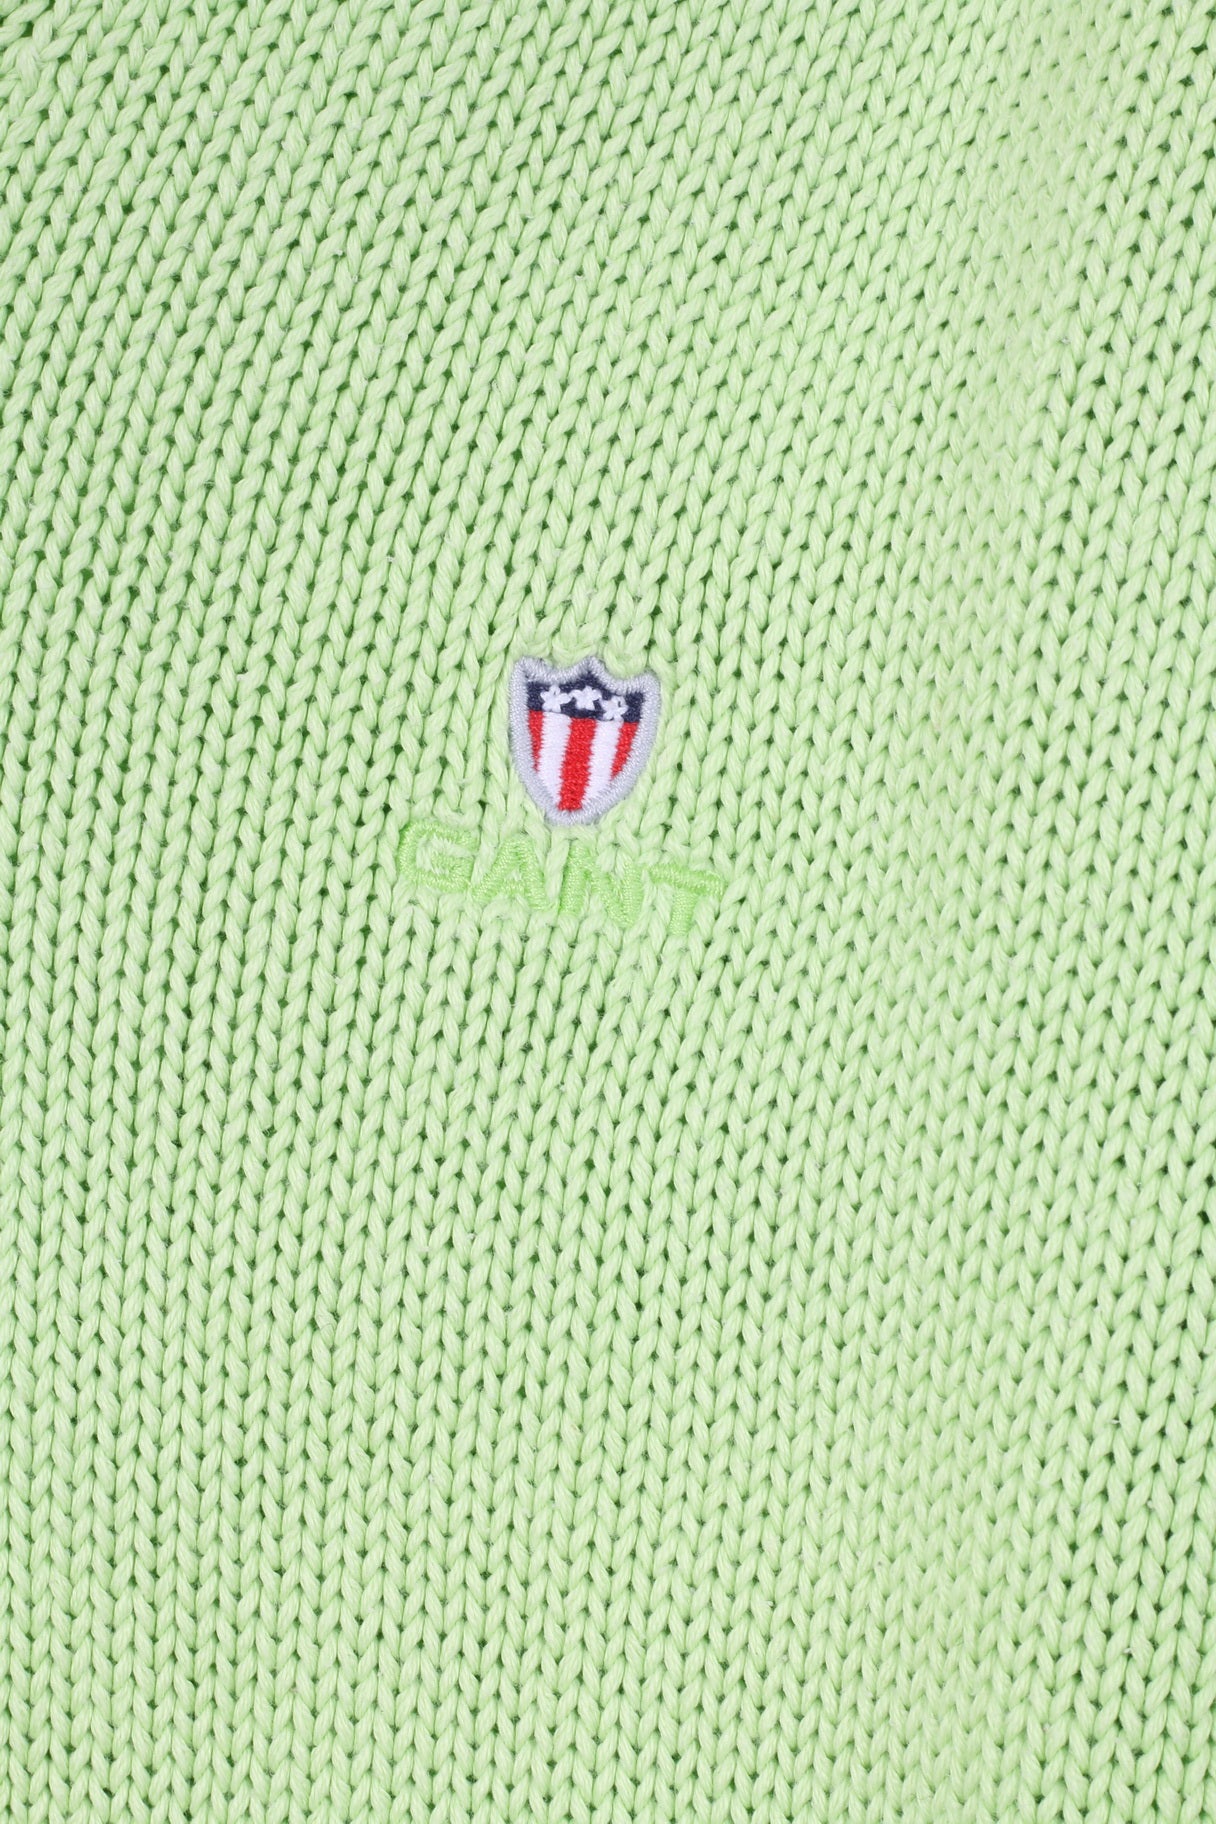 Gant Womens L Jumper Neon Green Sweater V Neck Cotton Top